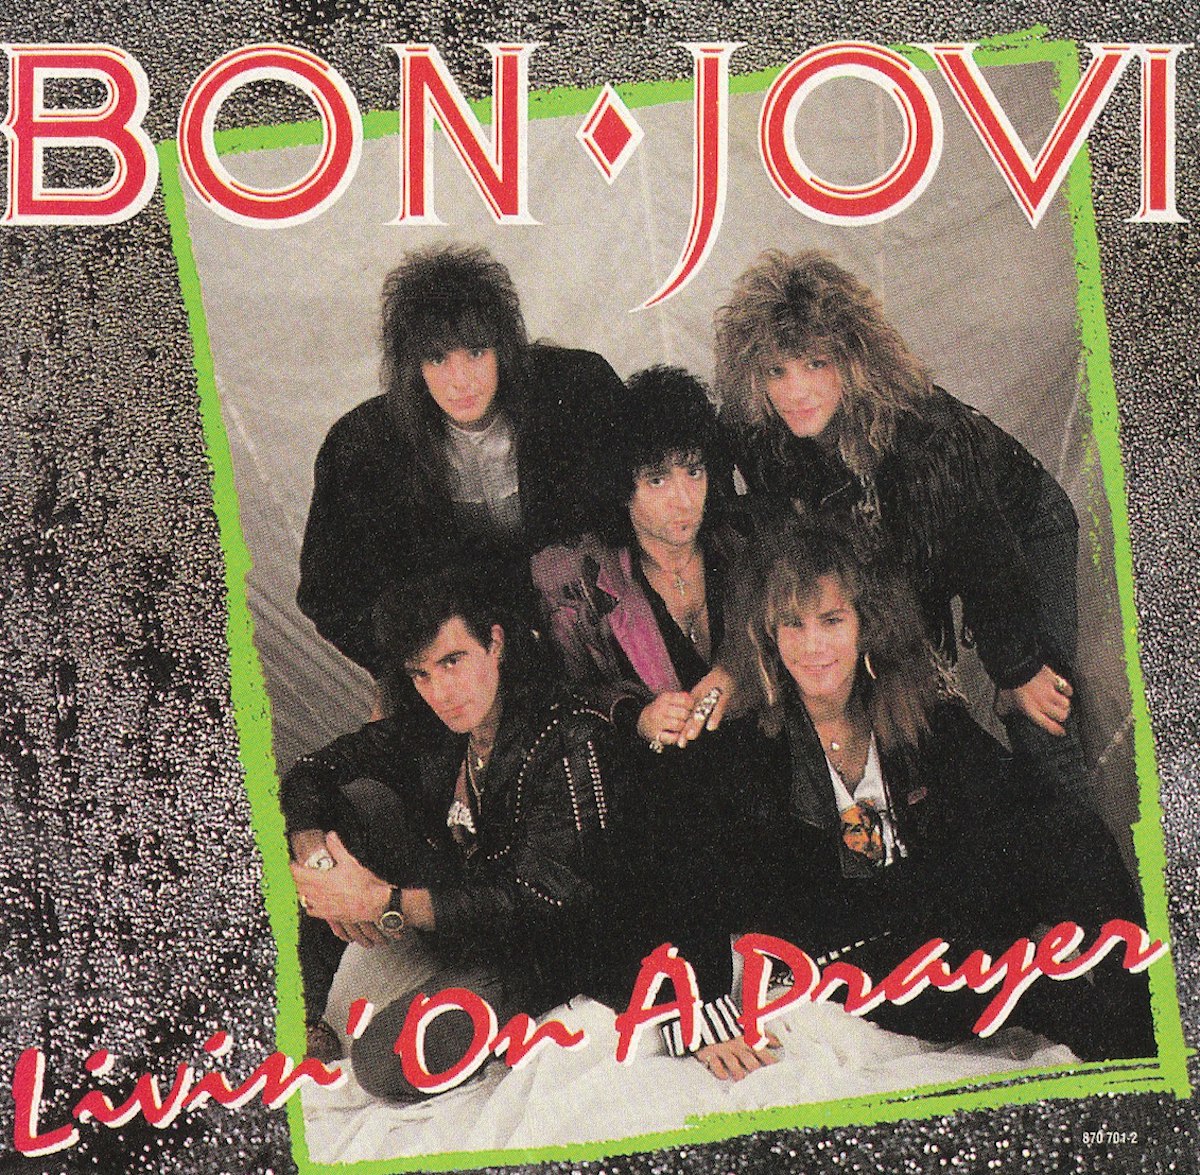 rock star bon jovi album cover